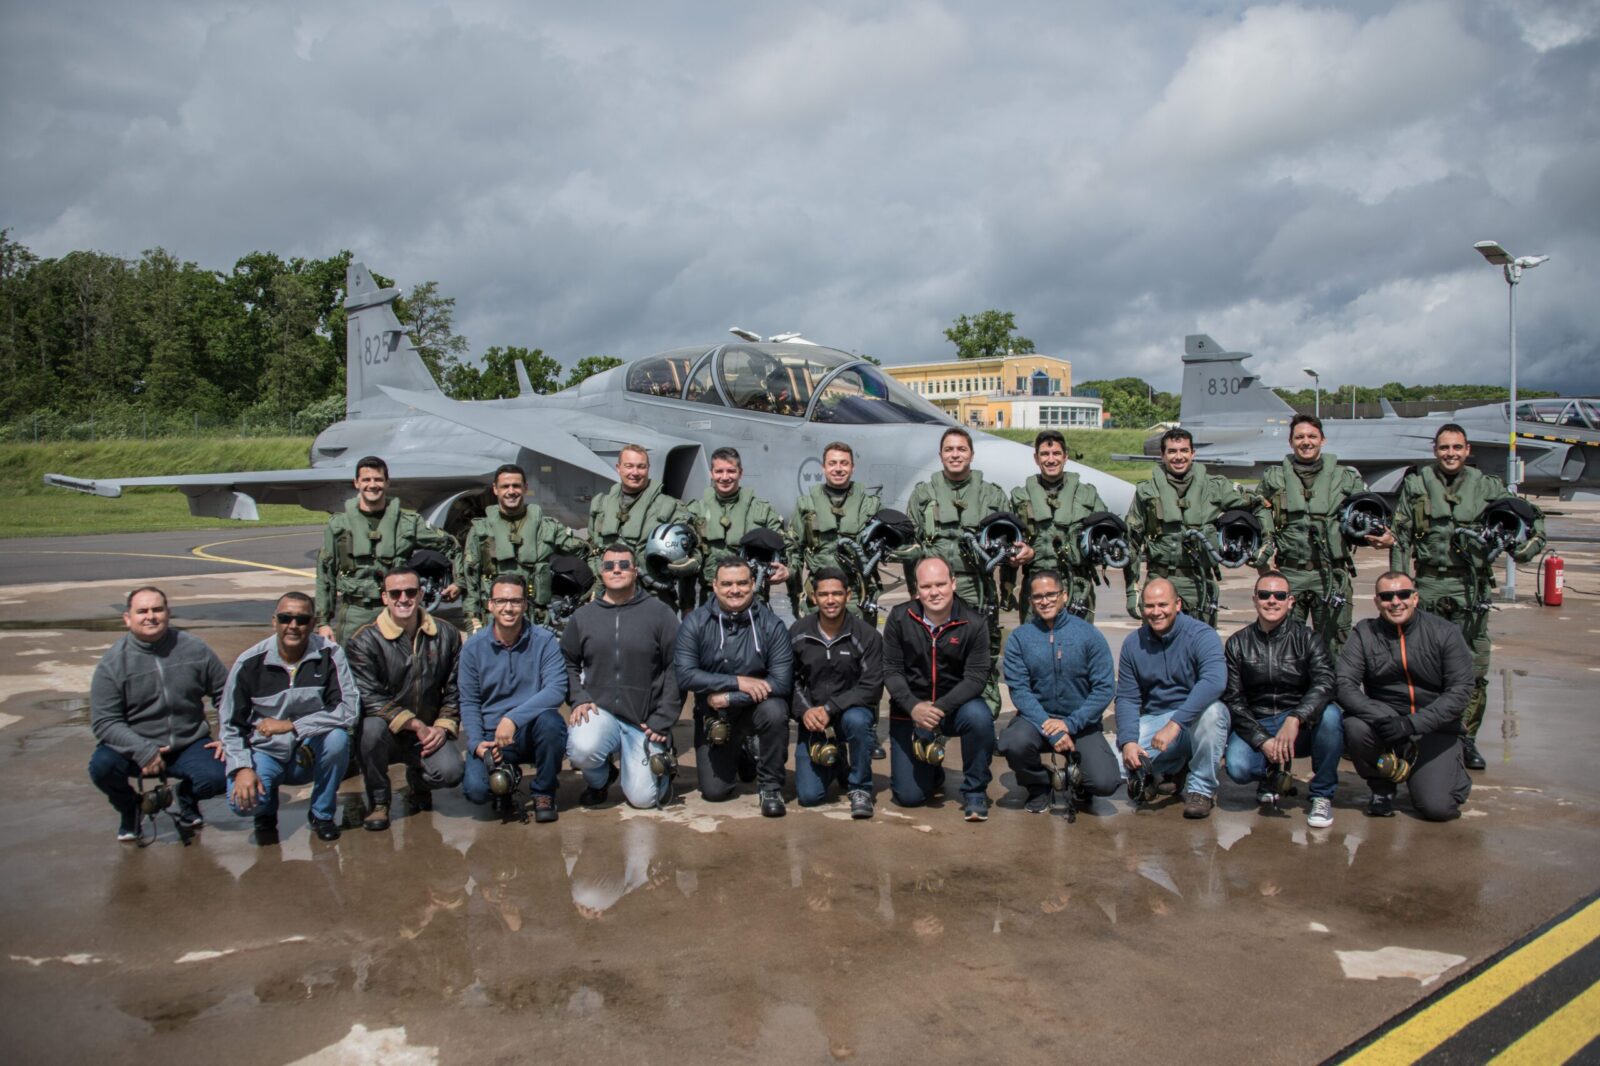 FAB technicians complete training in Sweden for Gripen fighter maintenance